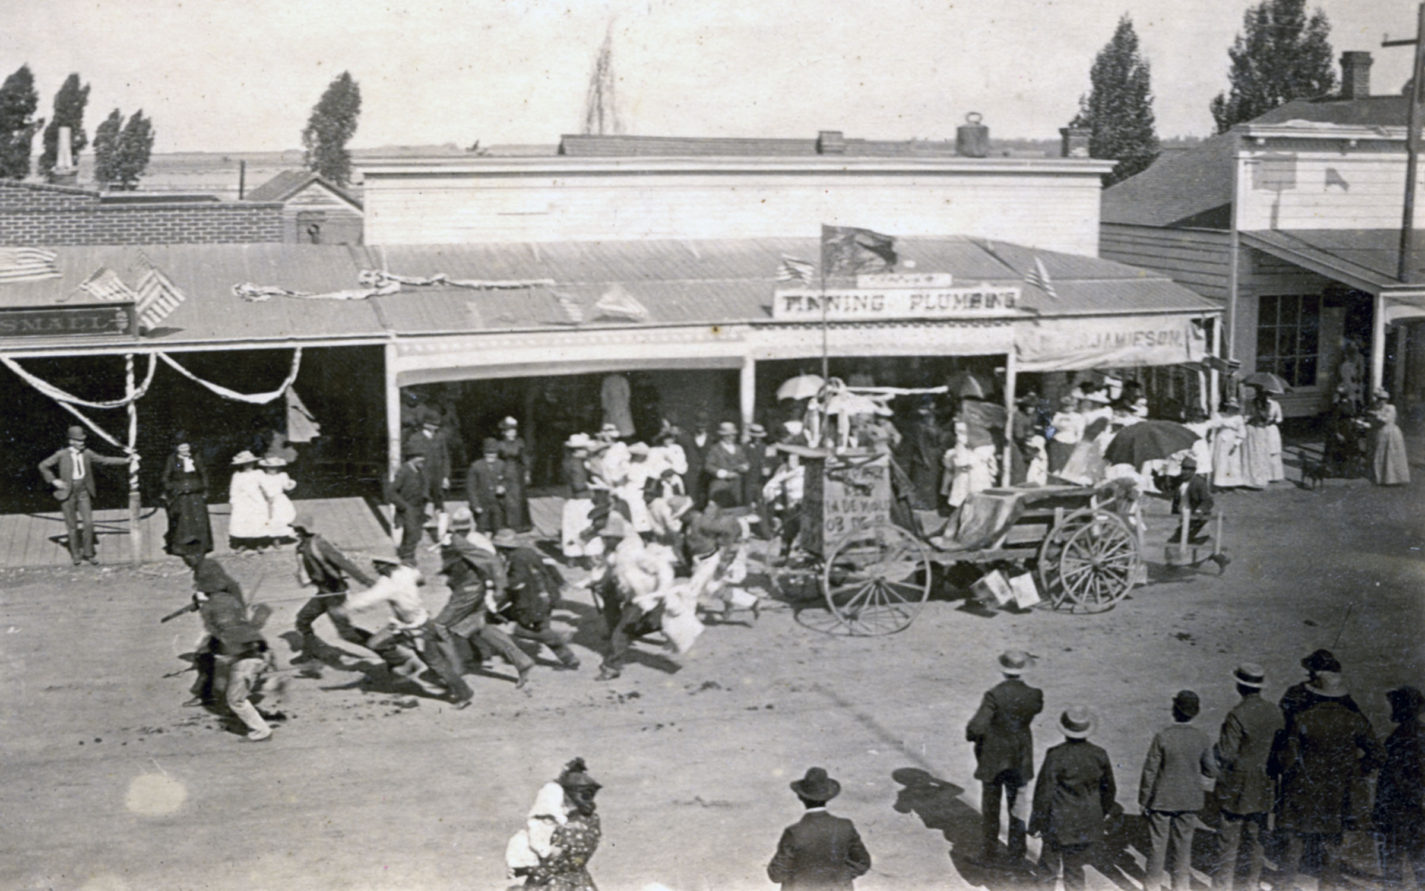 Running men pull wagon down street during a parade circa 1880s